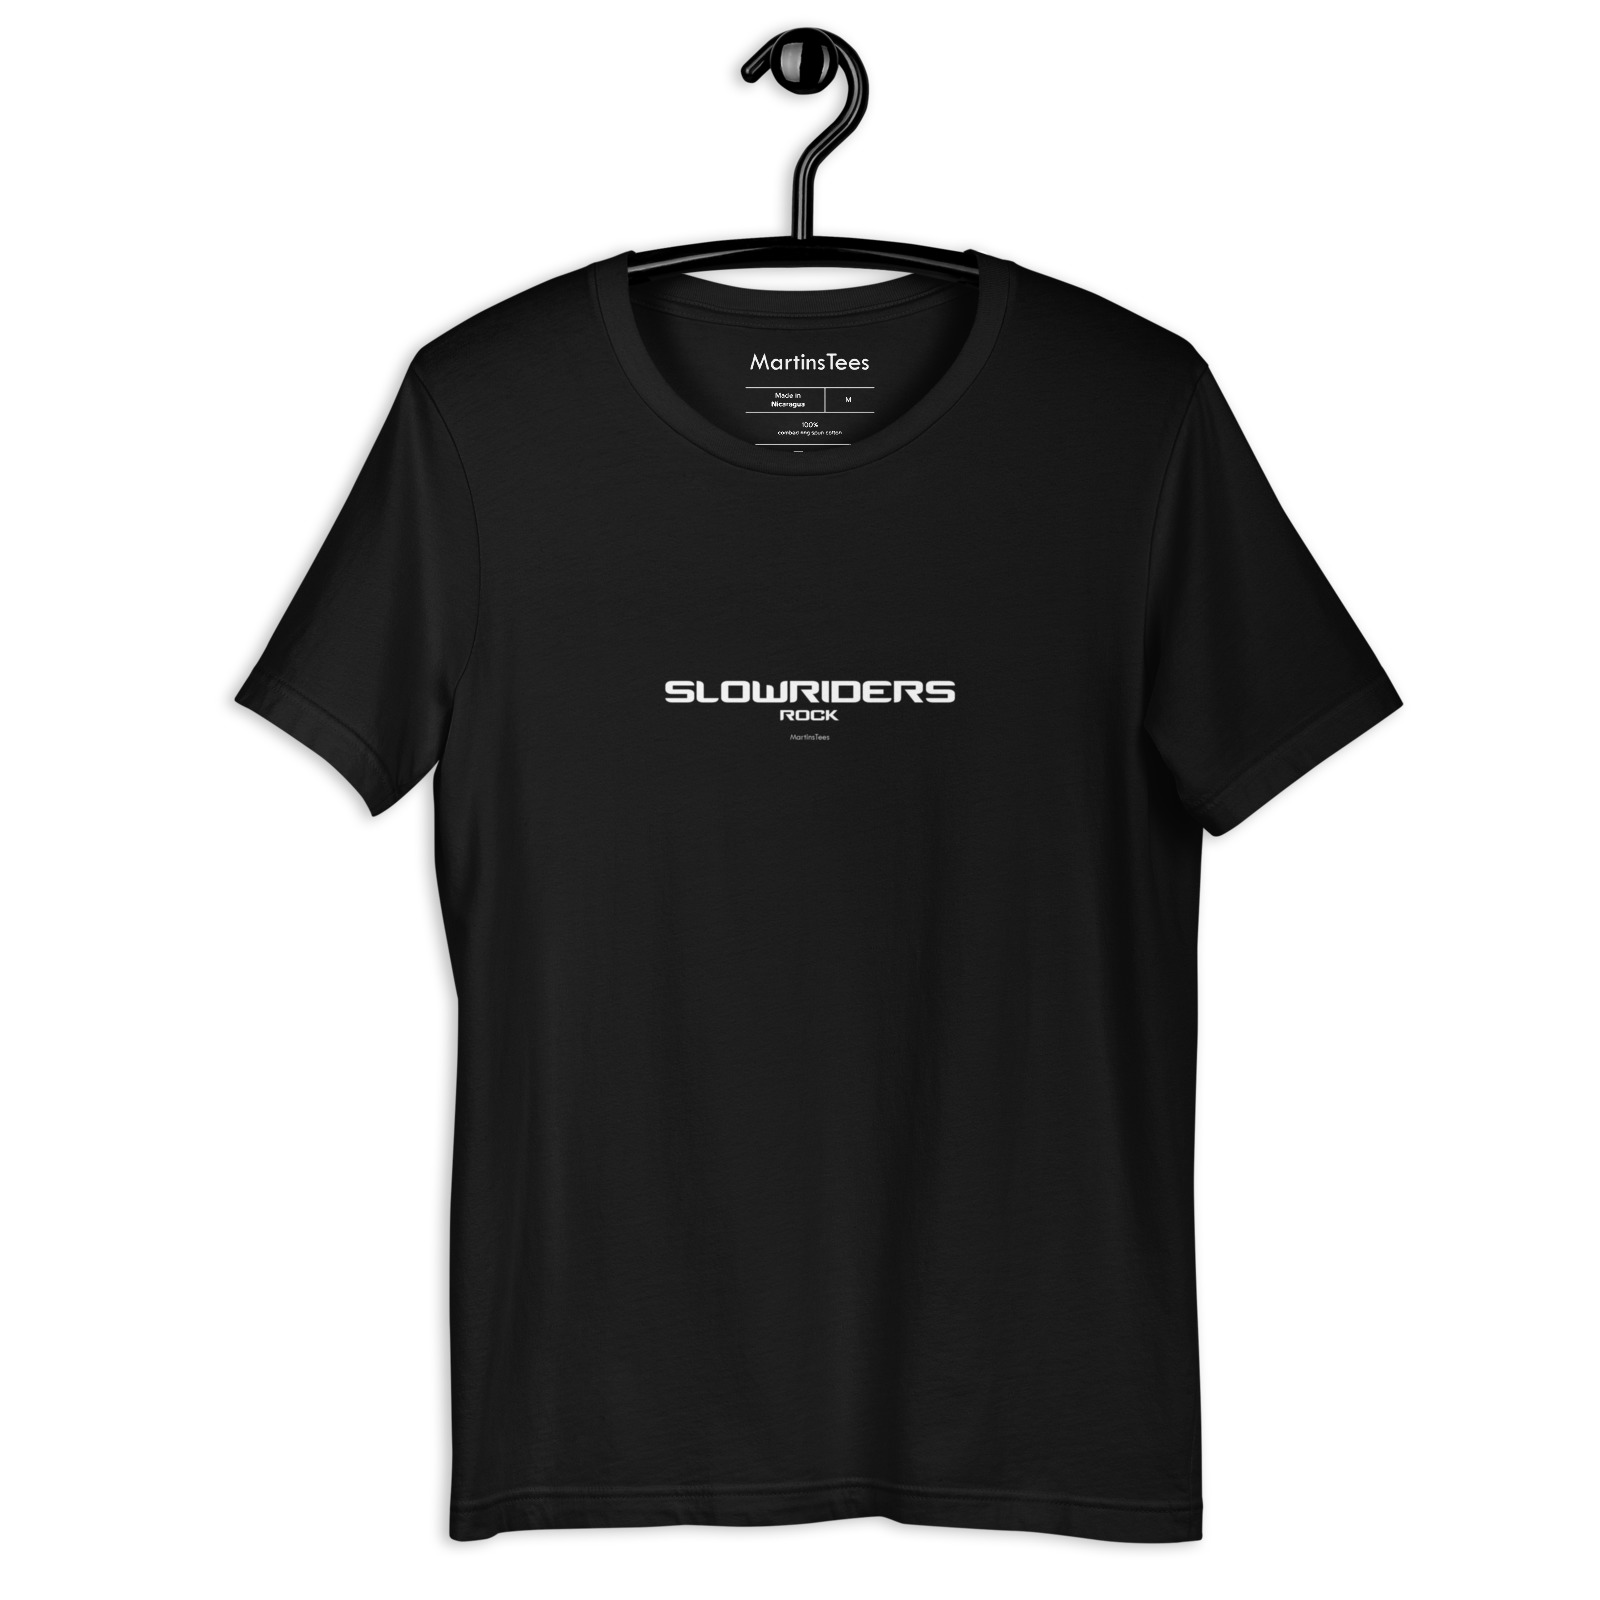 T-shirt: SLOWRIDERS - ROCK